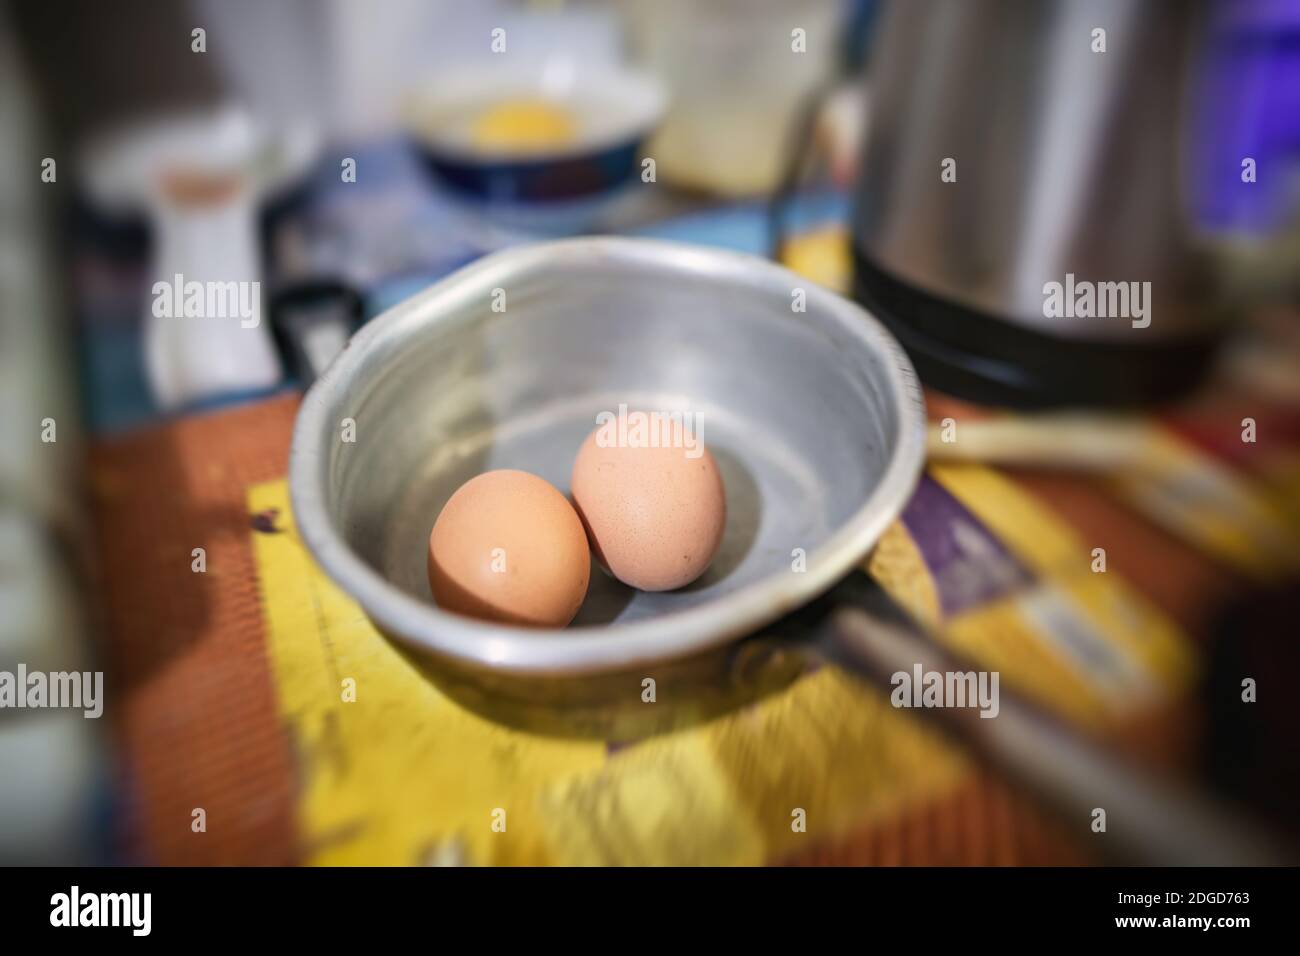 Zwei Eier liegen in der alten pogocom Aluminiumlöffel Stockfoto